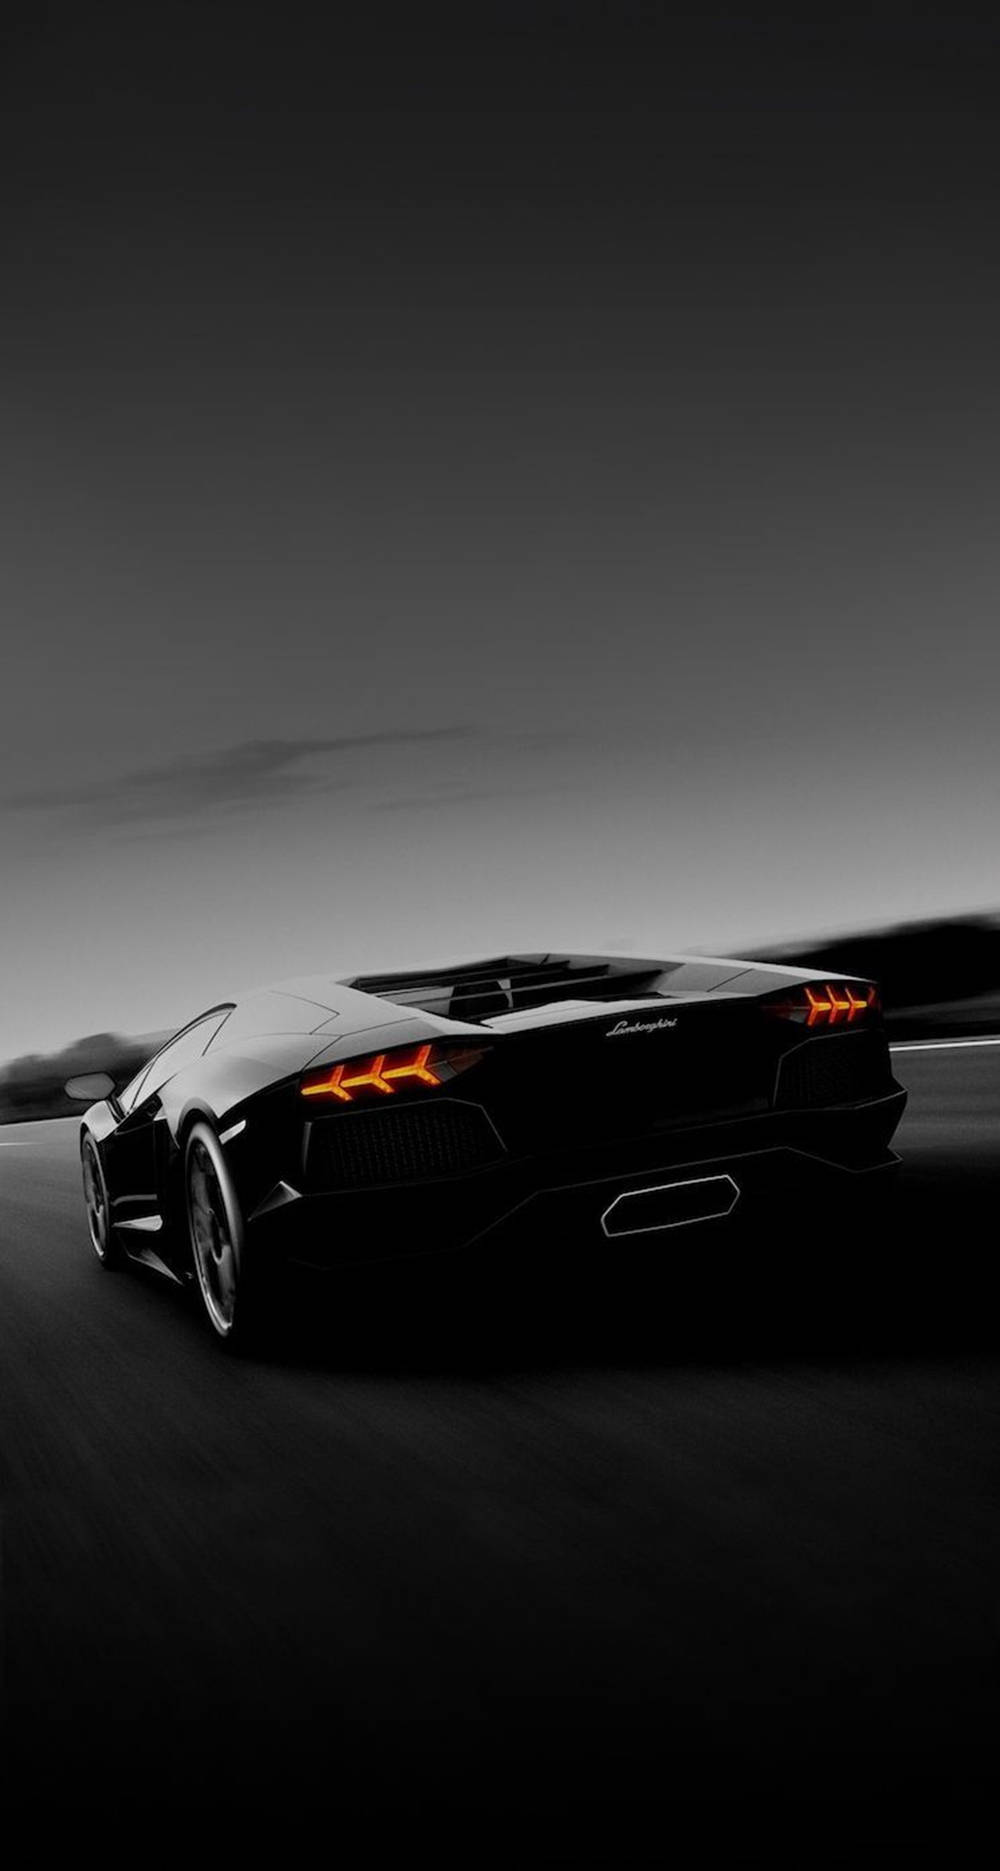 Mesmerizing Black Lamborghini Iphone Wallpaper